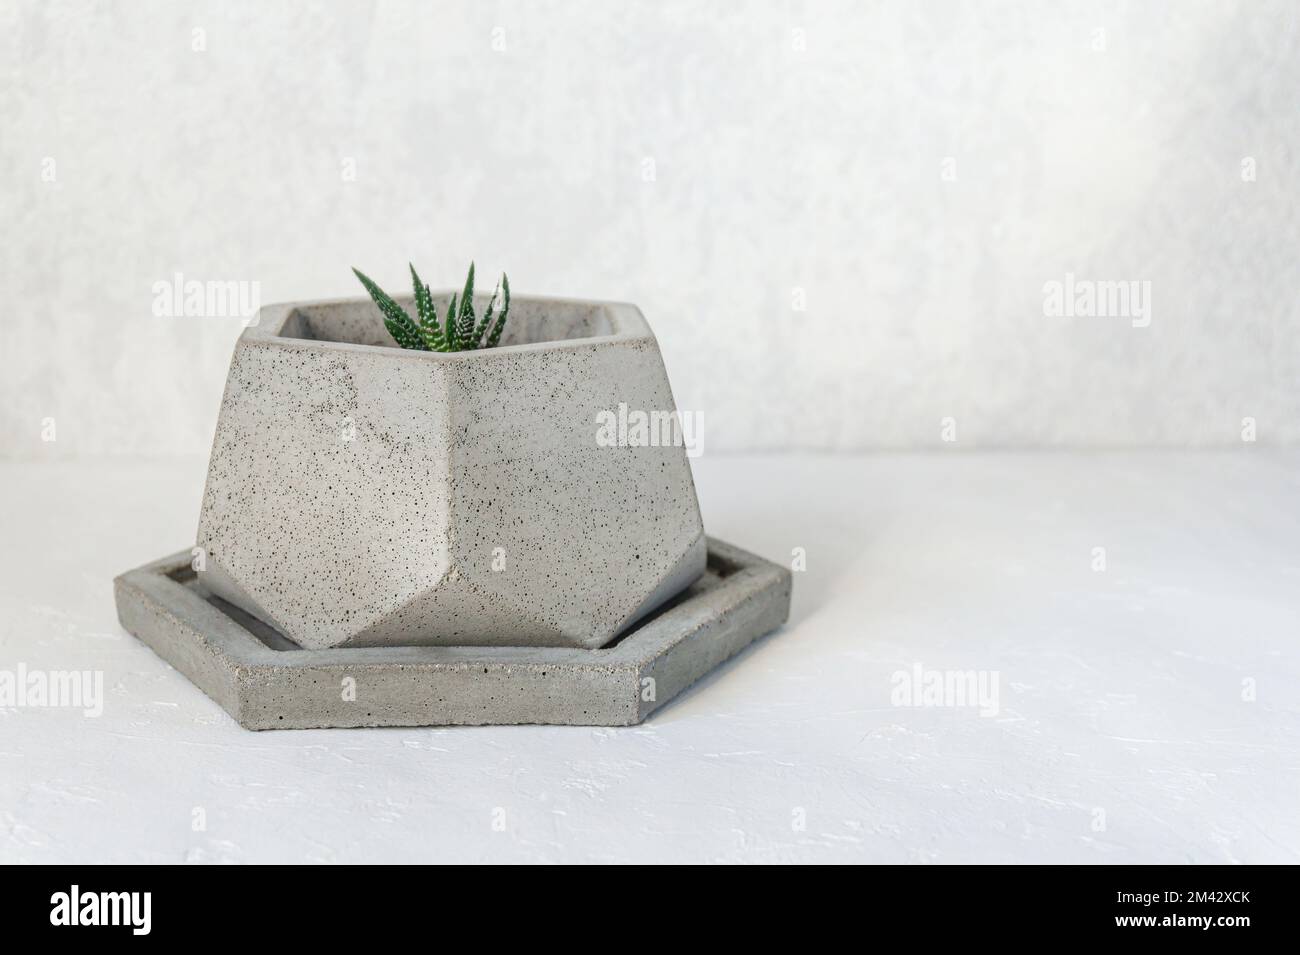 Concrete planter with small Haworthia succulent plant. DIY cement pentagon flower pot. Copy space for text. Stock Photo